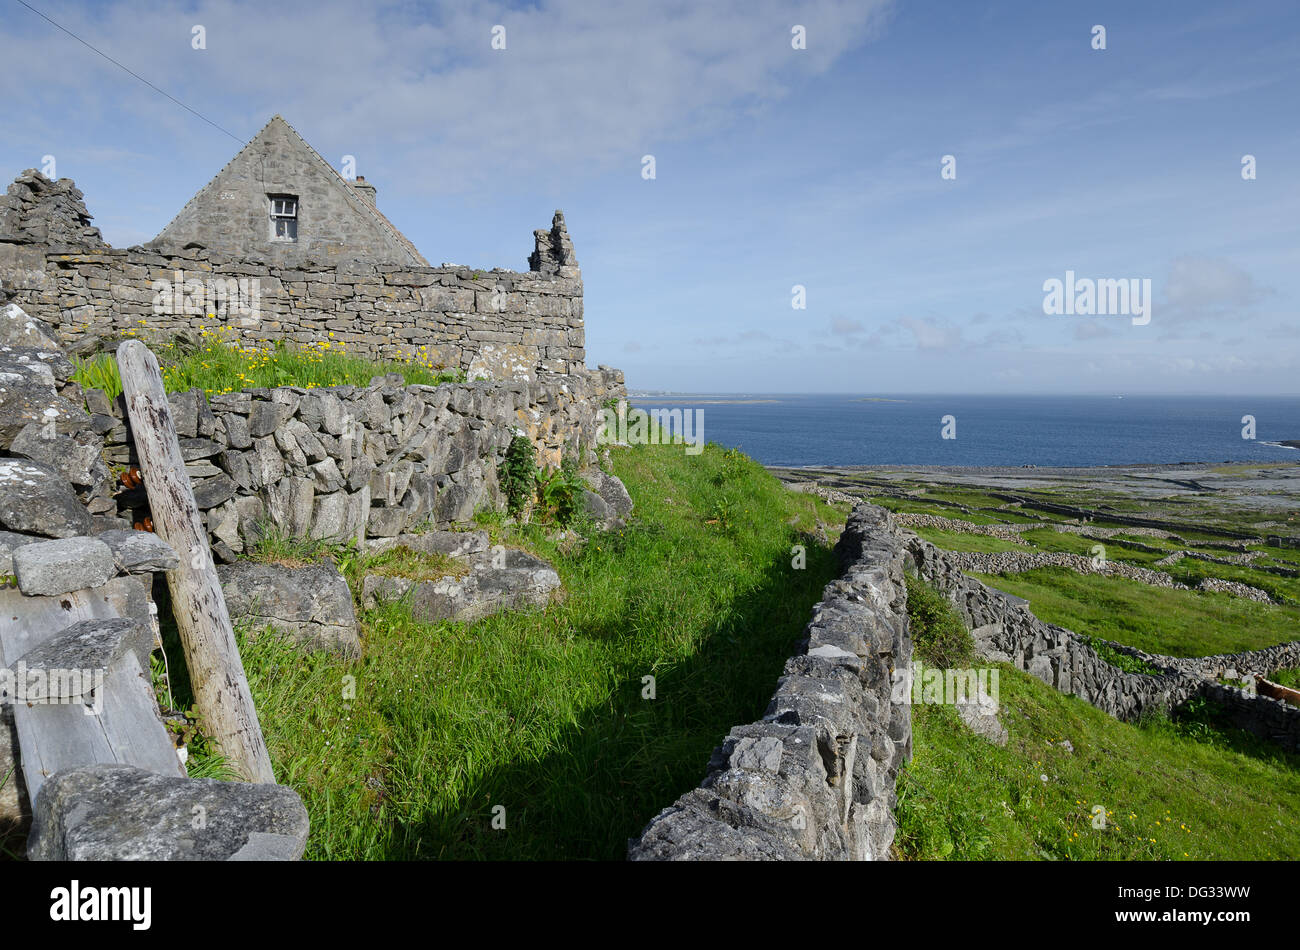 L'inis meain, les îles d'Aran, Irlande Banque D'Images